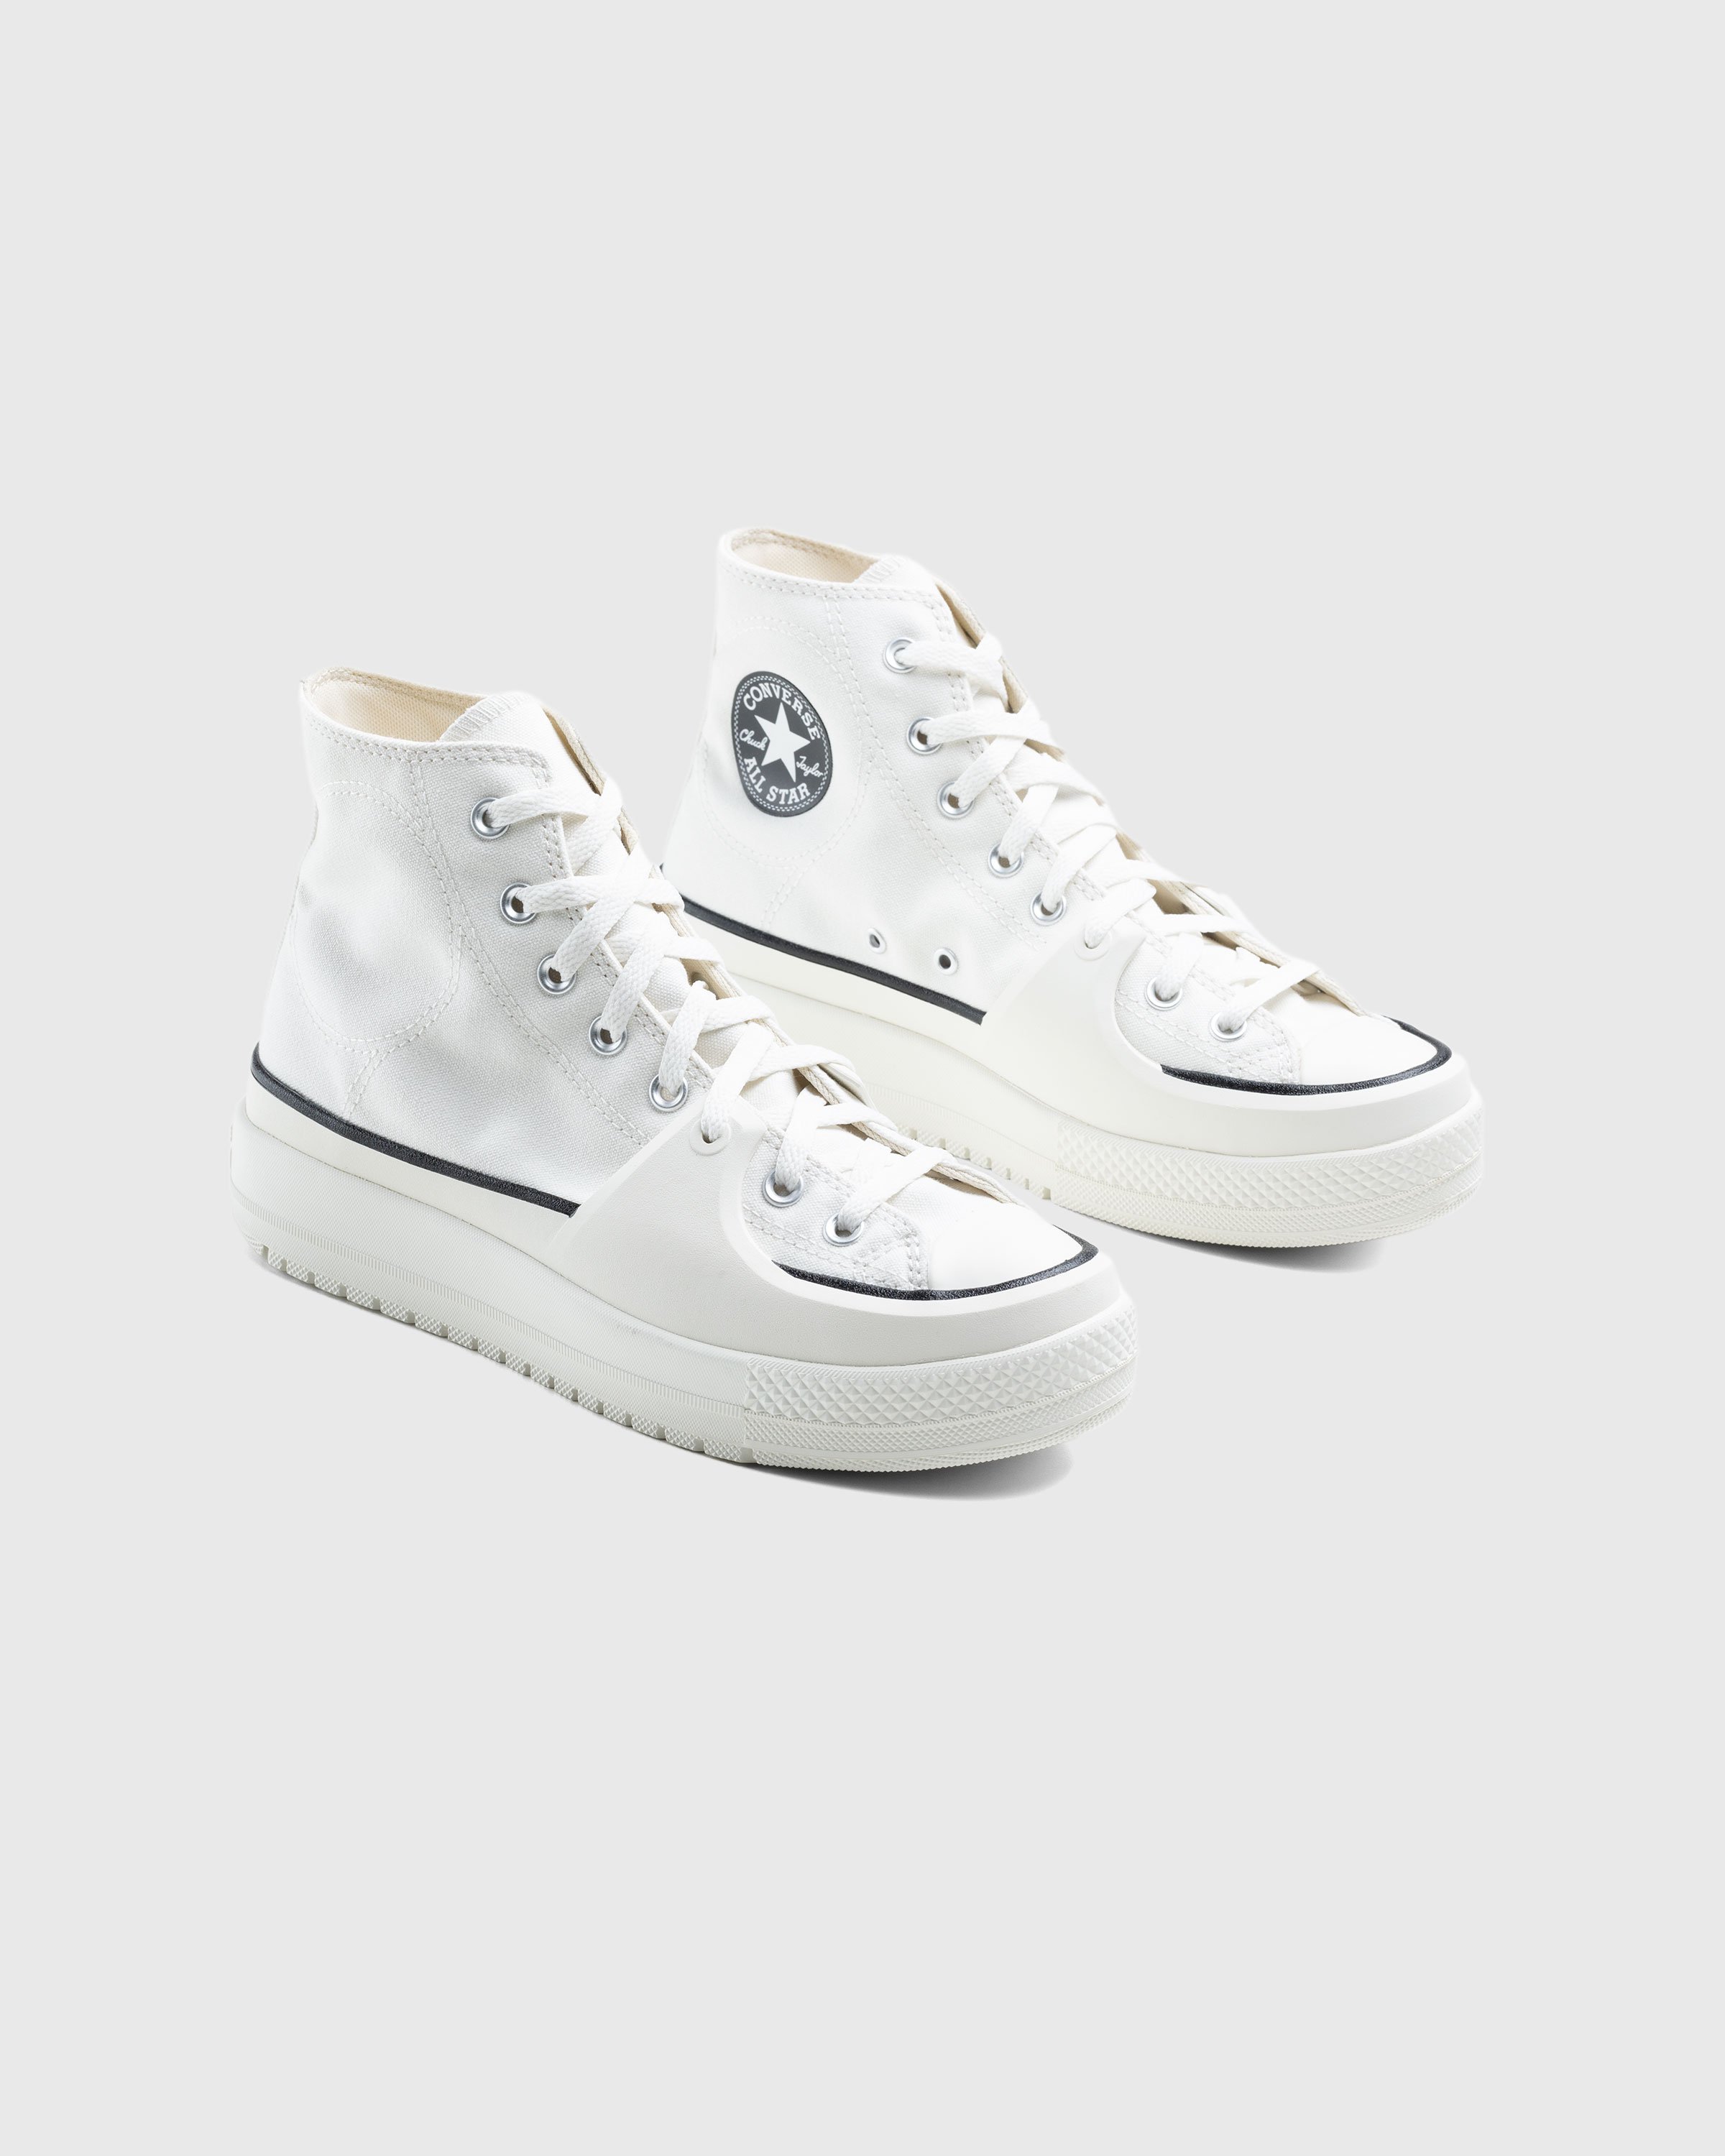 Converse - Chuck Taylor All Star Construct Hi Vintage White/Black/Egret - Footwear - Beige - Image 3